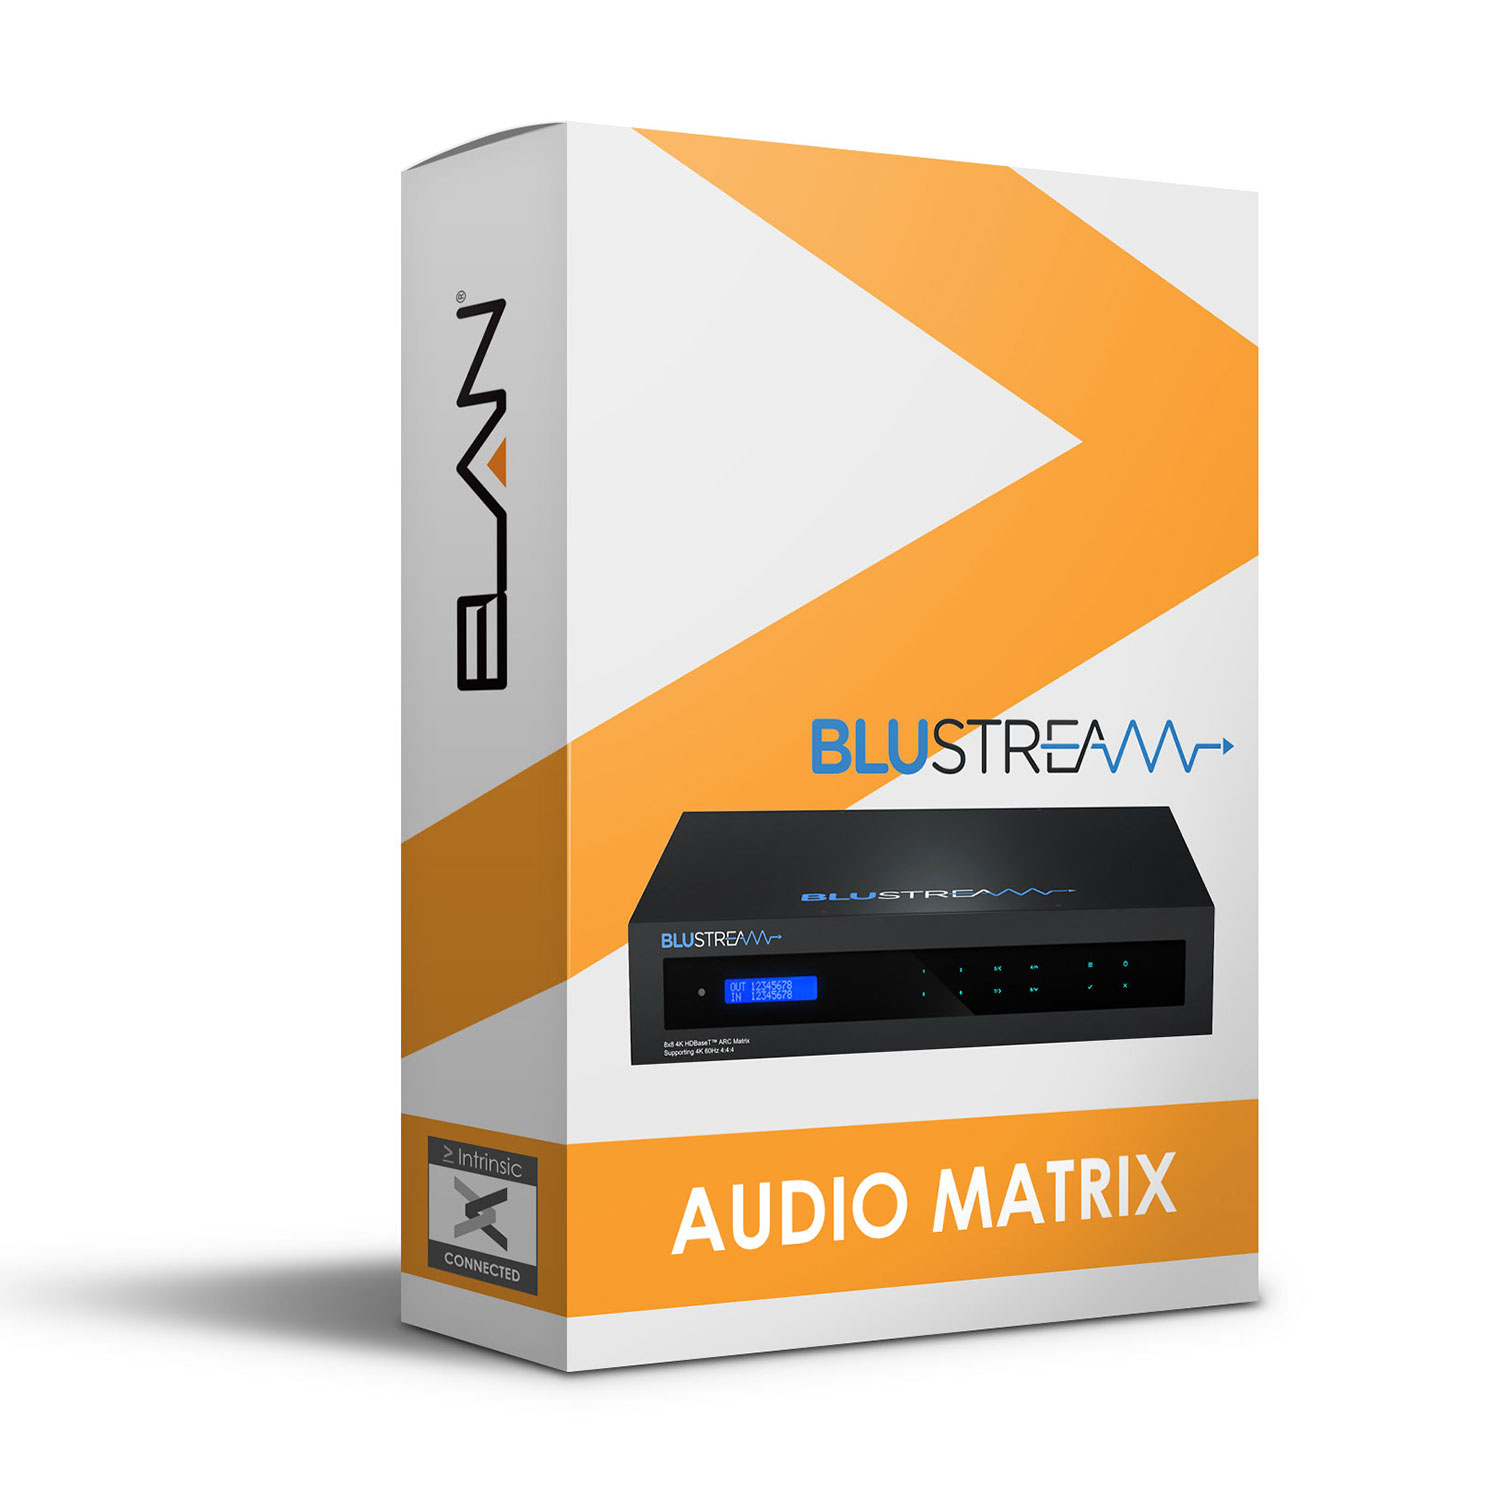 Blustream Audio Matrix Driver for ELAN